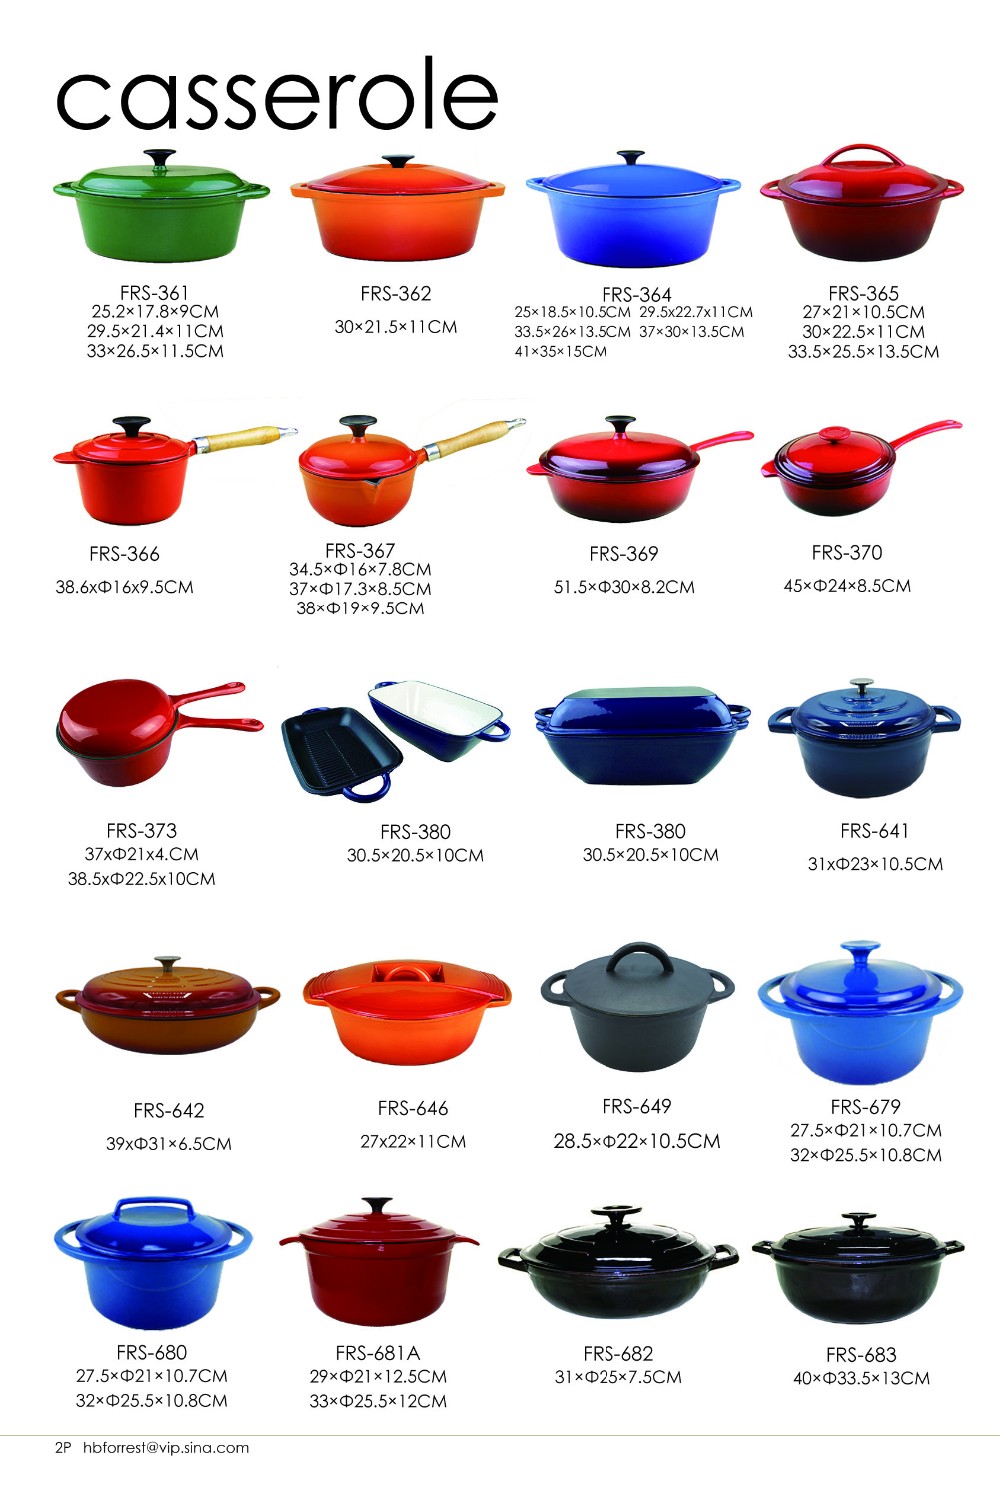 Hot Sale Cast Iron Cookware Set Oval Casserole Serving Dish